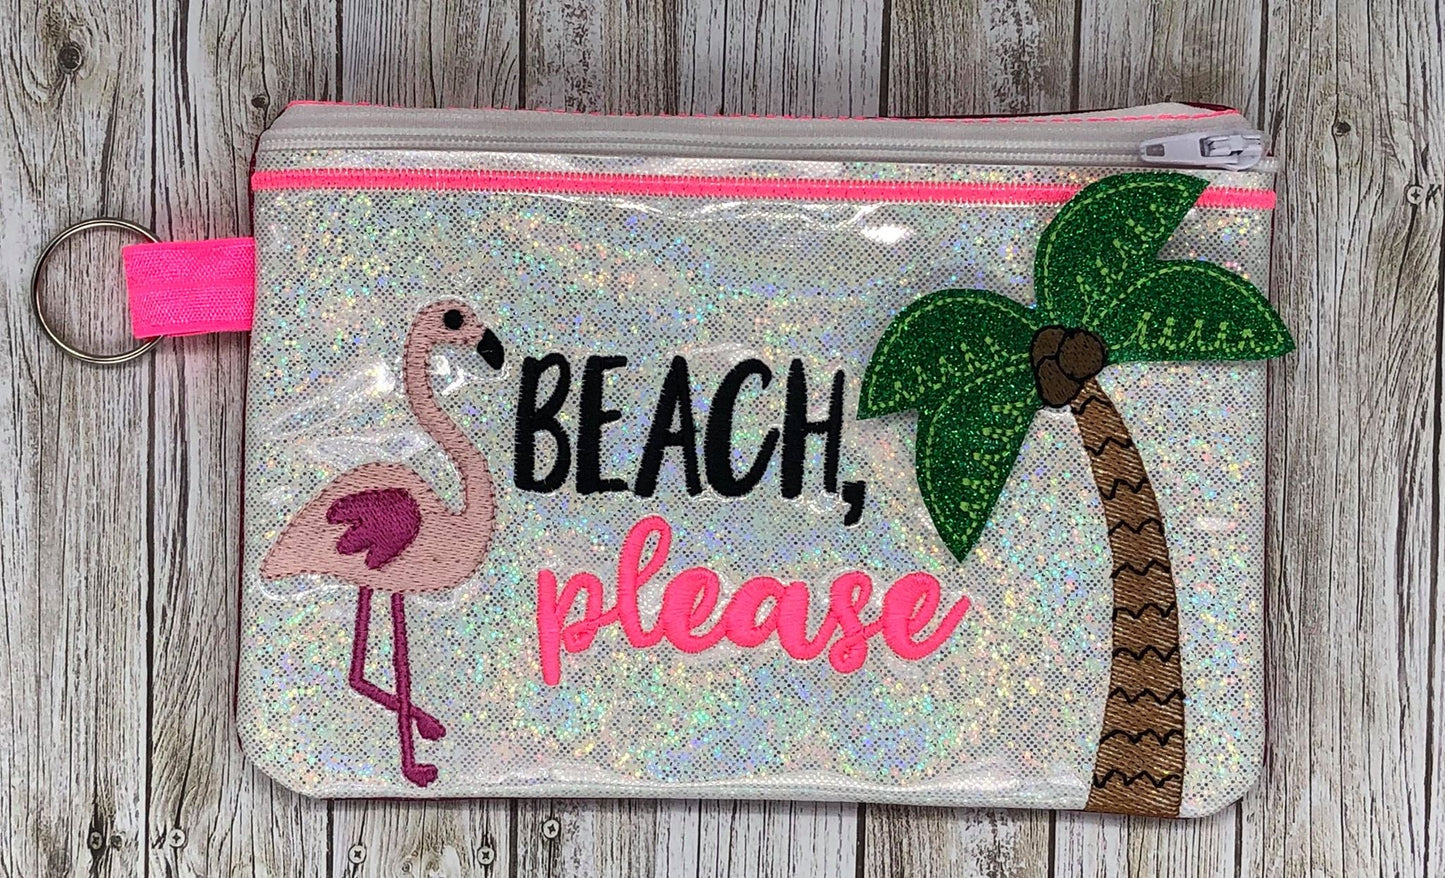 3D Beach, Please Zipper Bag 4x4, 5x7 and 6x10 - Digital Embroidery Design